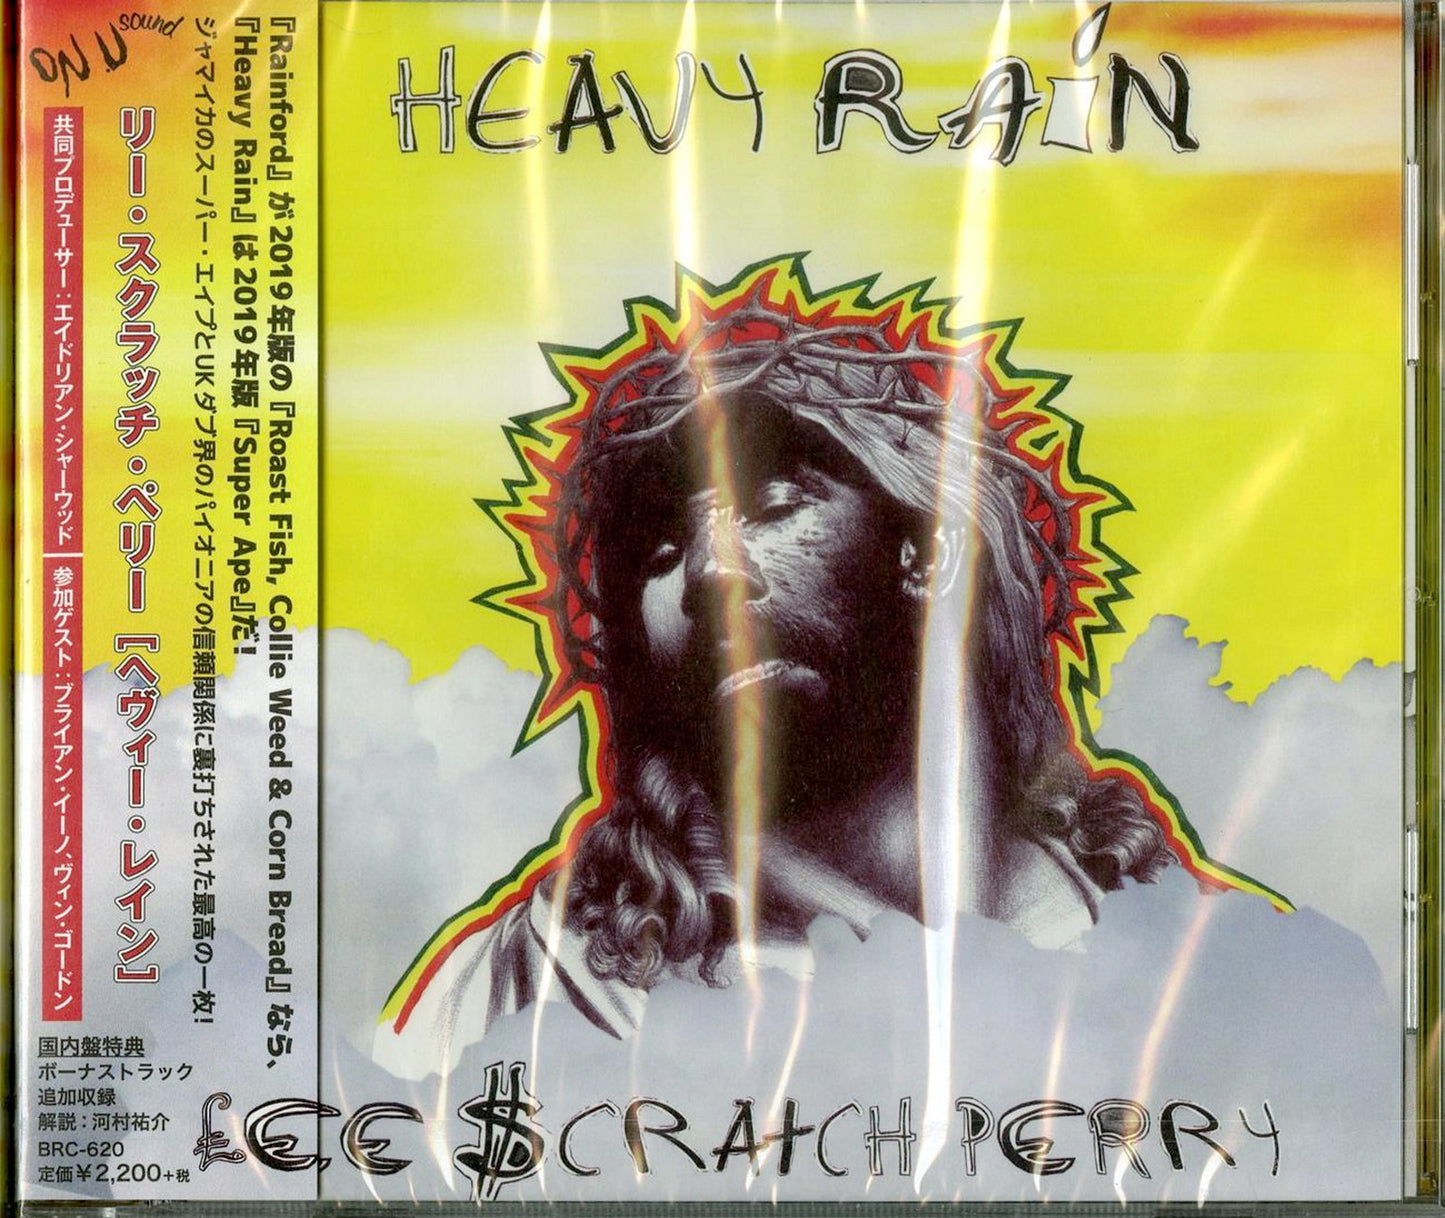 Lee Scratch Perry - Heavy Rain - Japan  CD Bonus Track